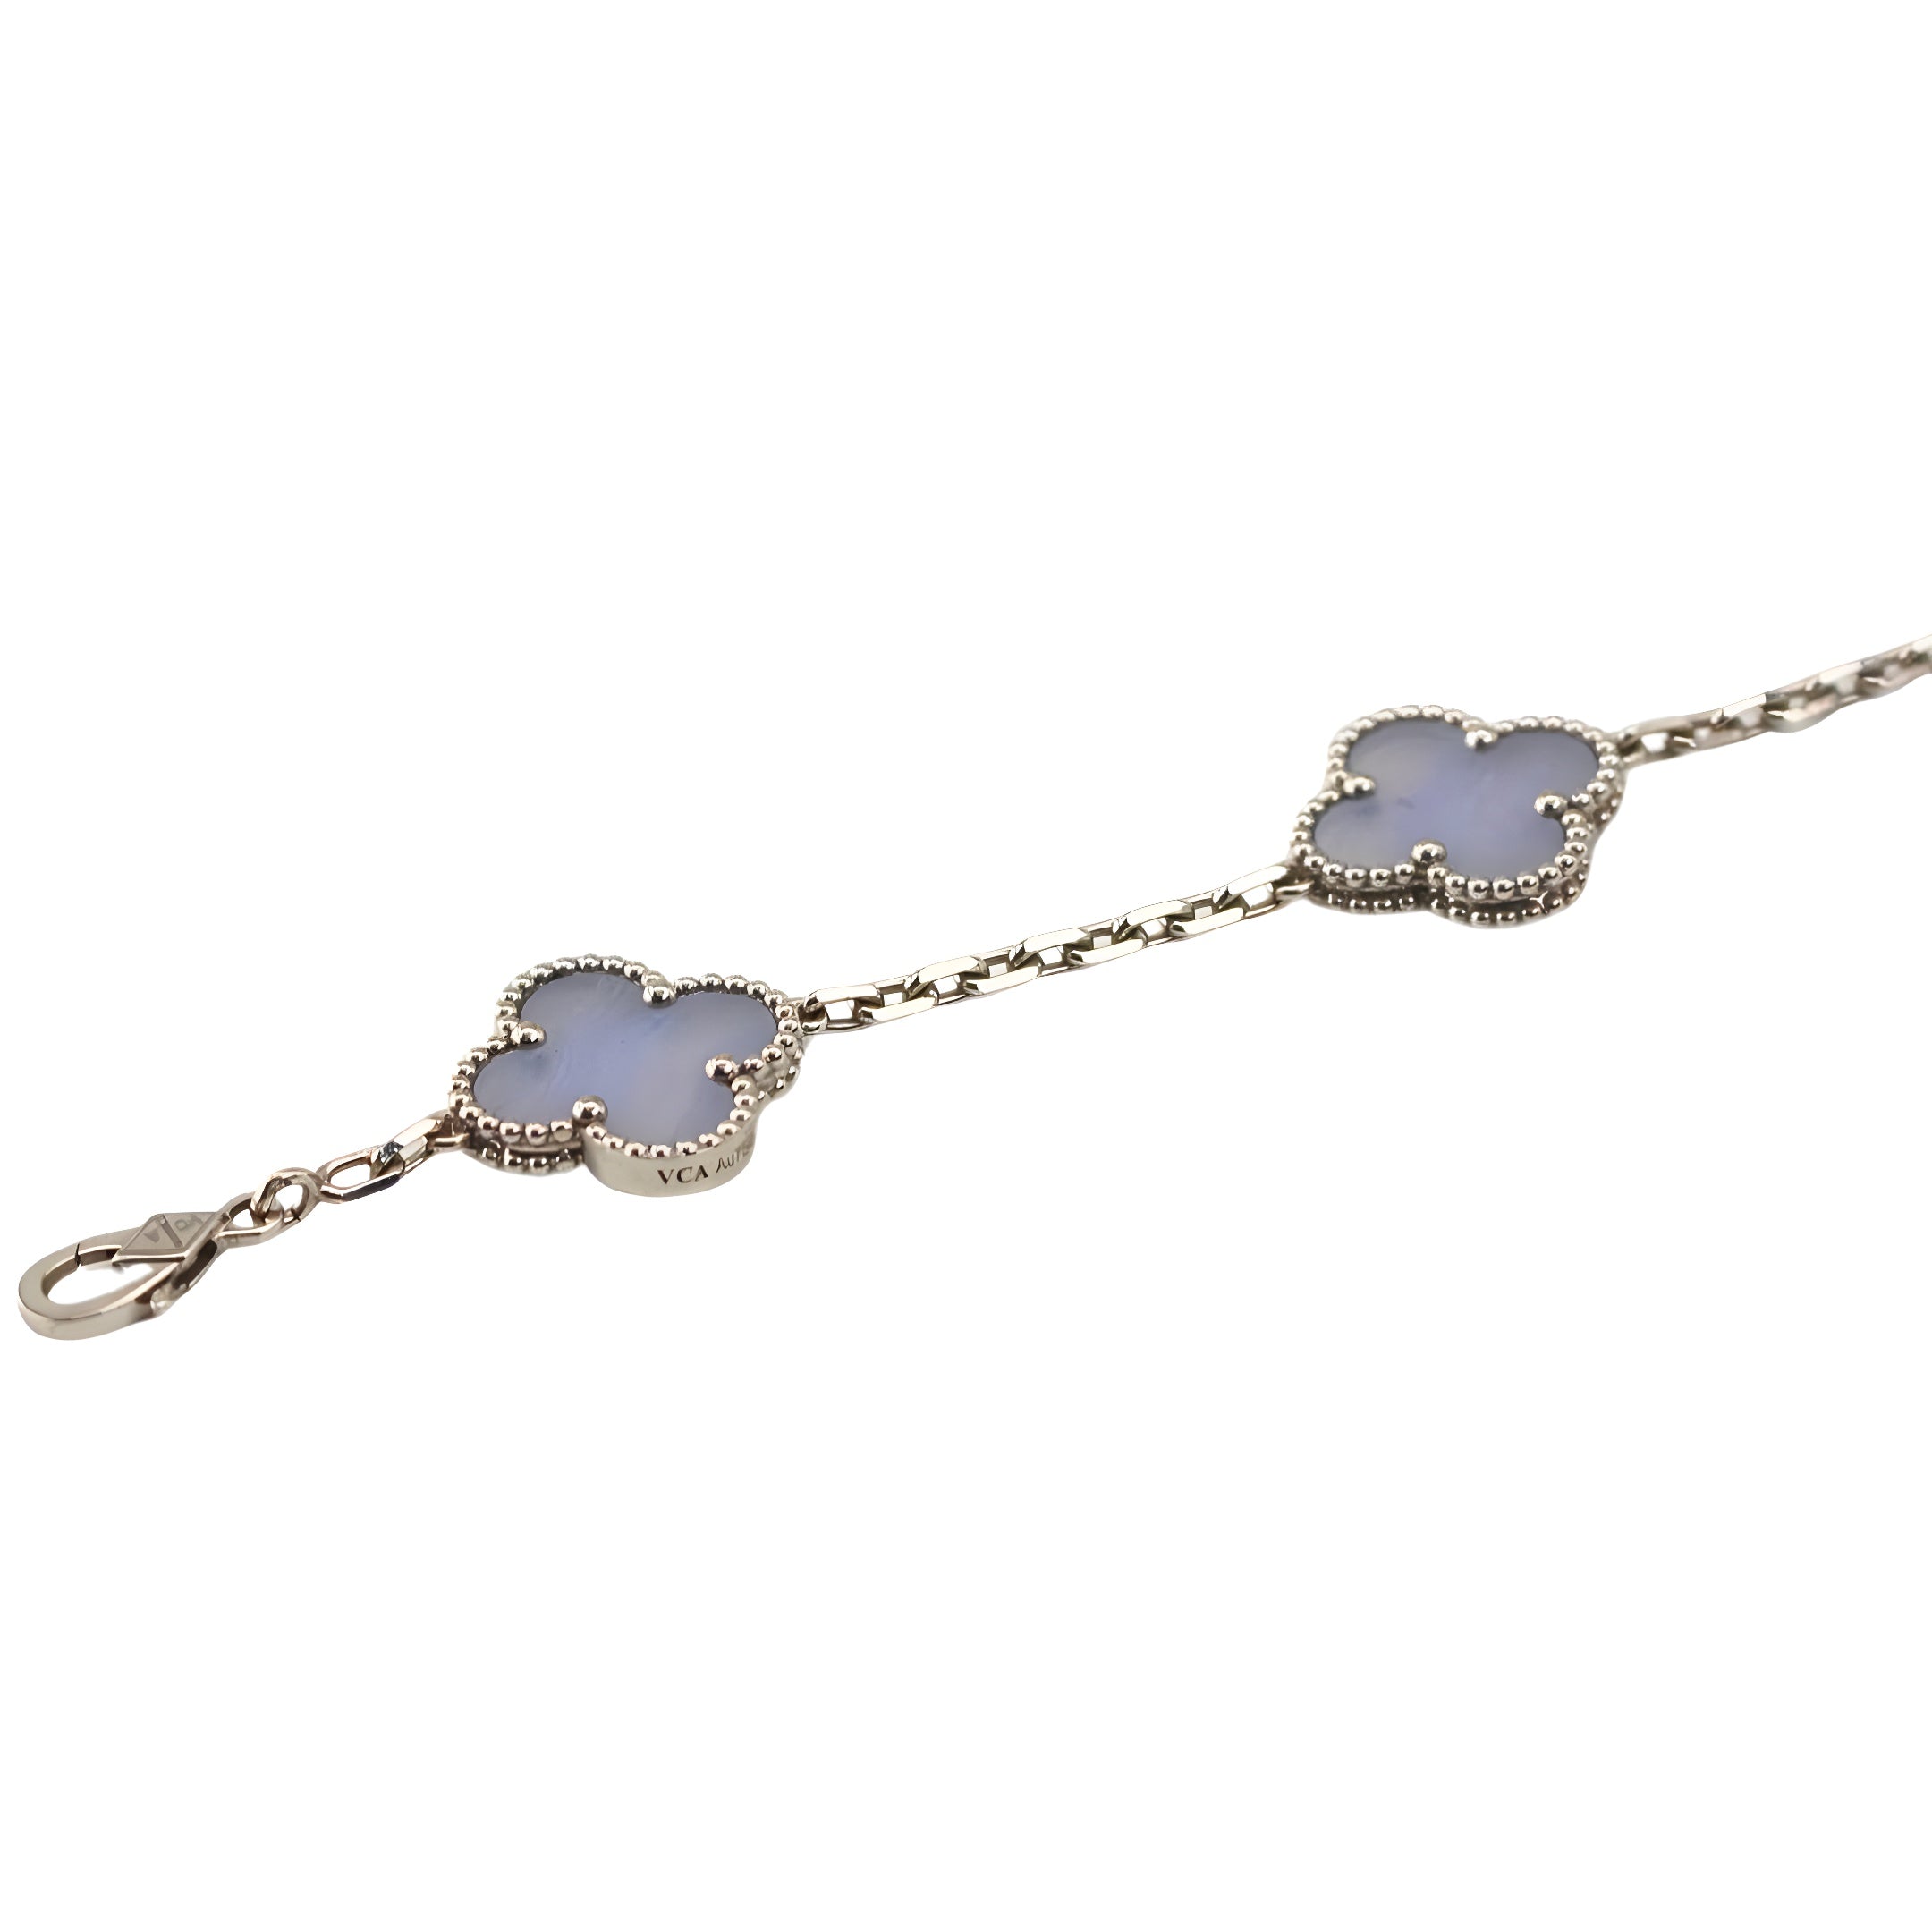 Van Cleef & Arpels Vintage Alhambra Bracelet 5 Motifs Chalcedony 18K White Gold